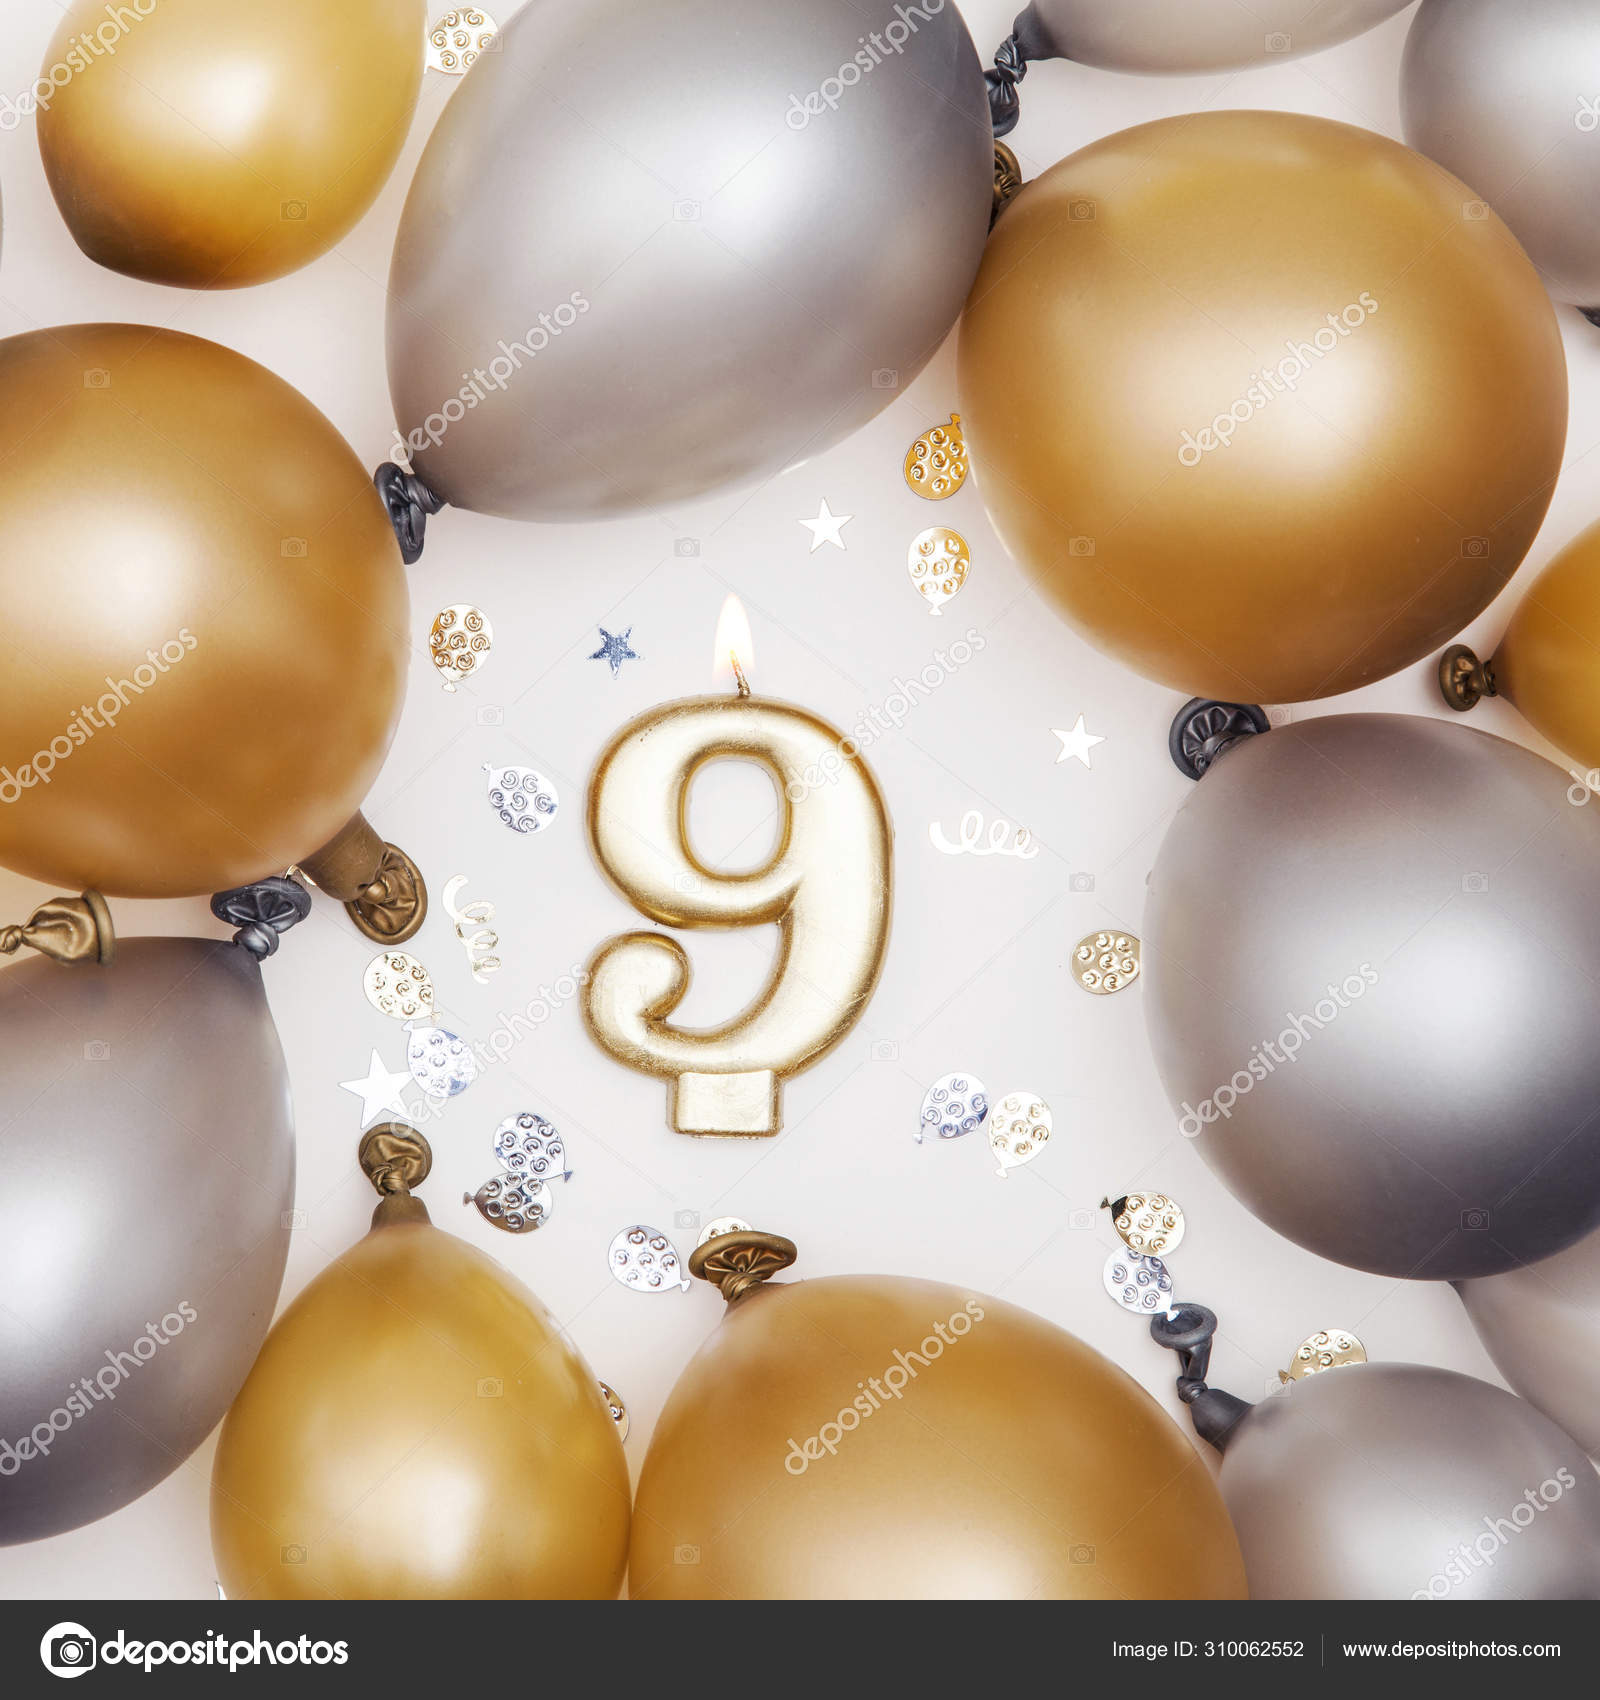 Geburtstagsfeier Nummer 9 Kerze Mit Goldenem Und Silbernem Ballon Stockfotografie Lizenzfreie Fotos C Inkdropcreative Depositphotos